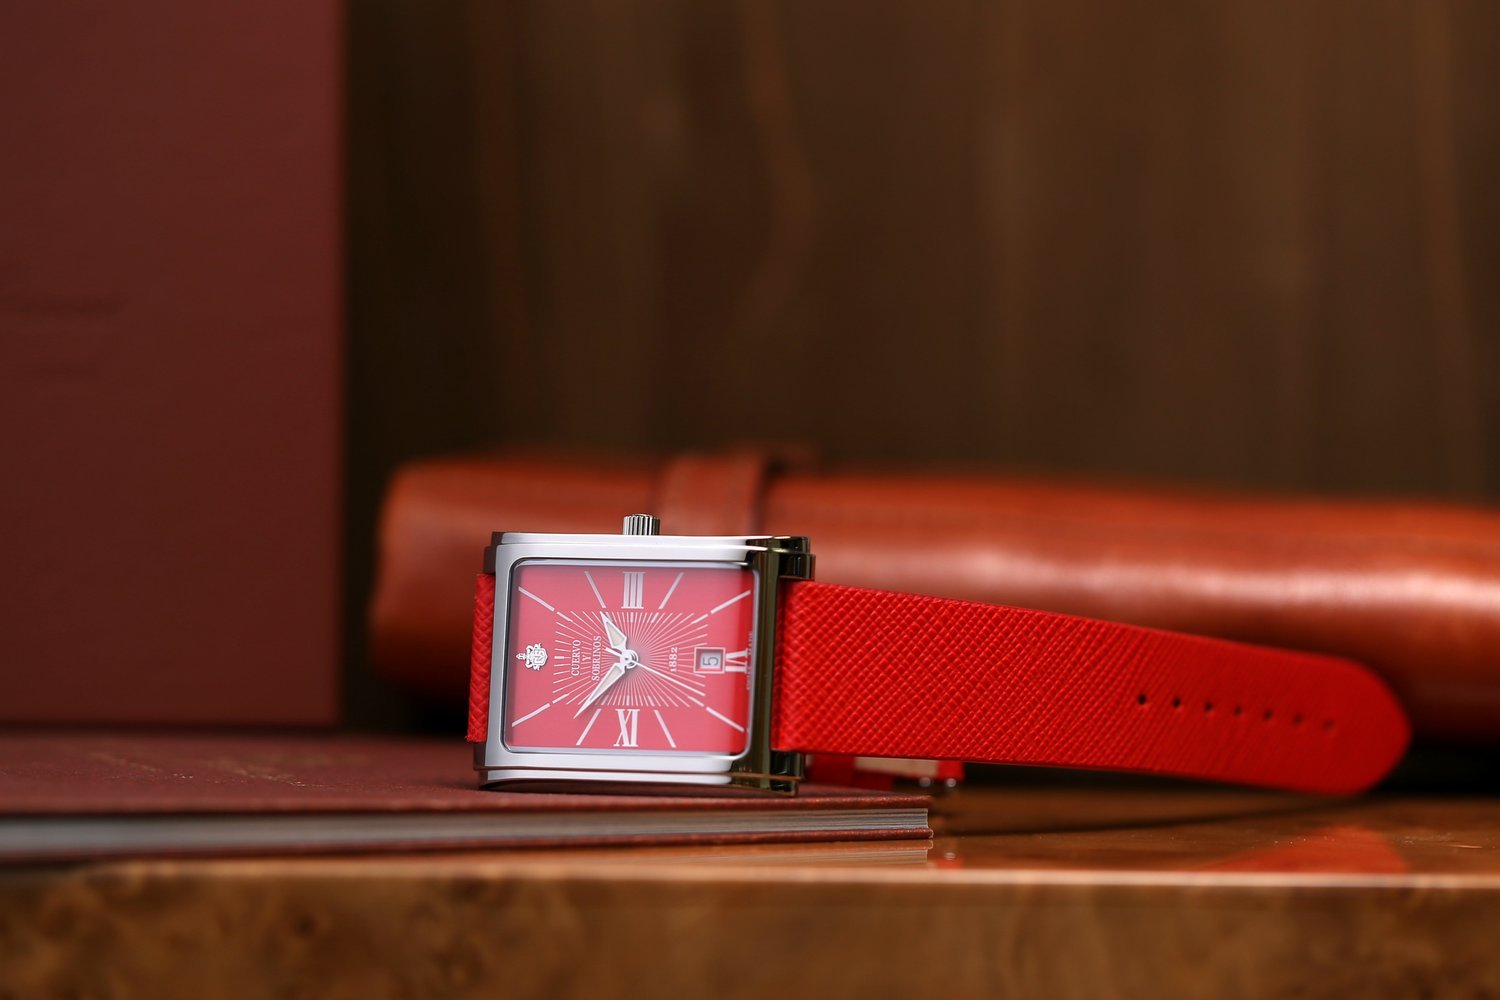 Prominente Quartz Watch in Red - thegreatputonmvProminente Quartz Watch in RedProminente Quartz Watch in RedProminente Quartz Watch in RedWatchesCuervo y SobrinosthegreatputonmvProminente Quartz Watch in Red66101433